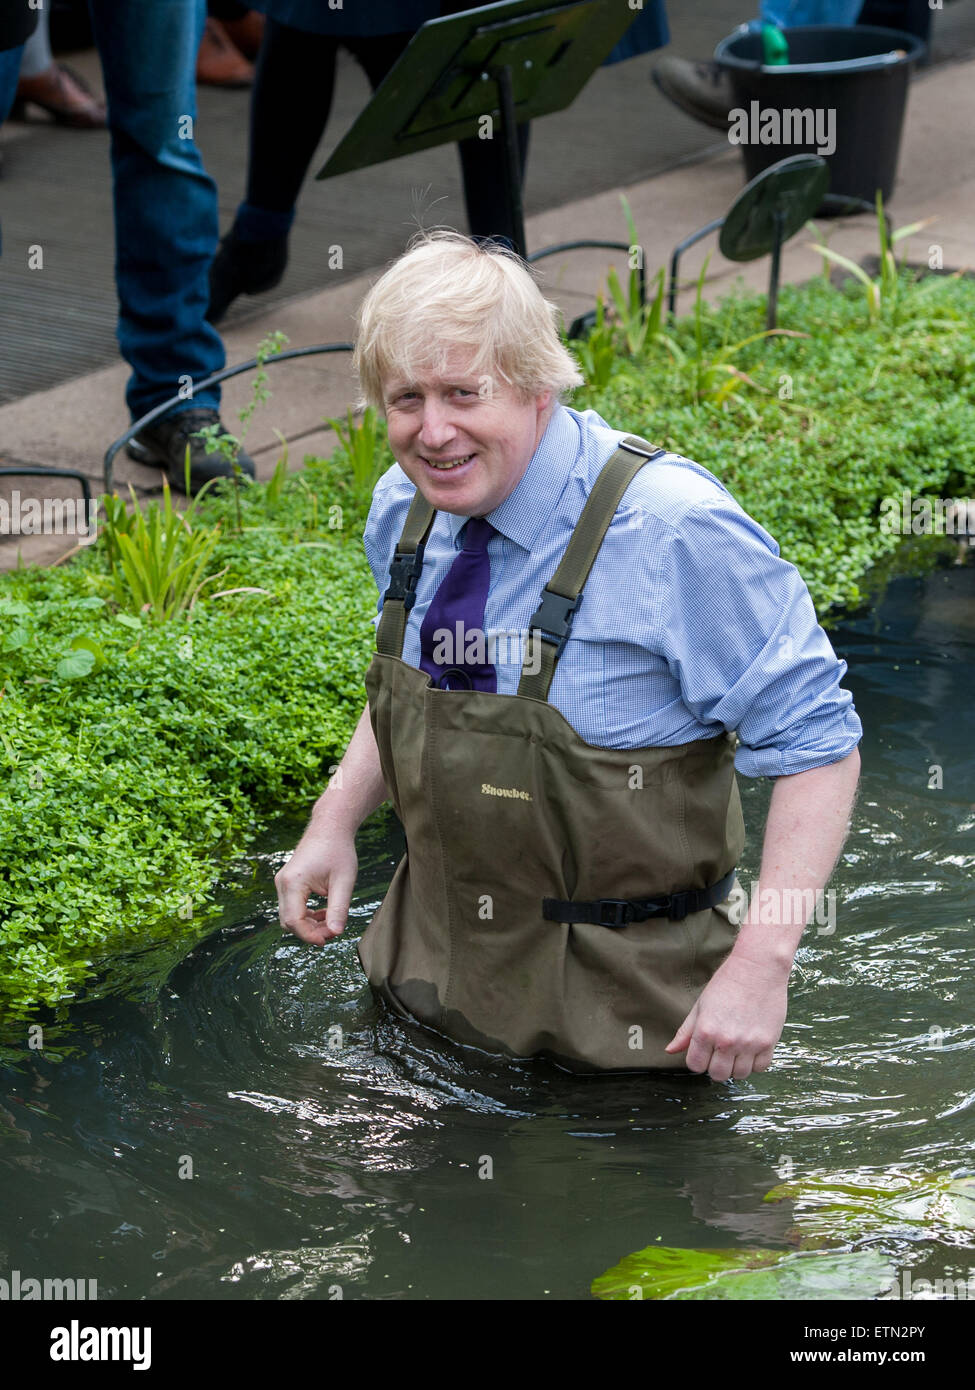 Boris Johnson, Bürgermeister von London trägt Watvögel am Prince Of Wales  Conservatory in Londons Royal Botanical Gardens, Kew Victoria Amazonica  Seerosen, Hybrid Seerosen und Lotus Pflanzen Pflanzen. Der Bürgermeister  wurde von renommierten